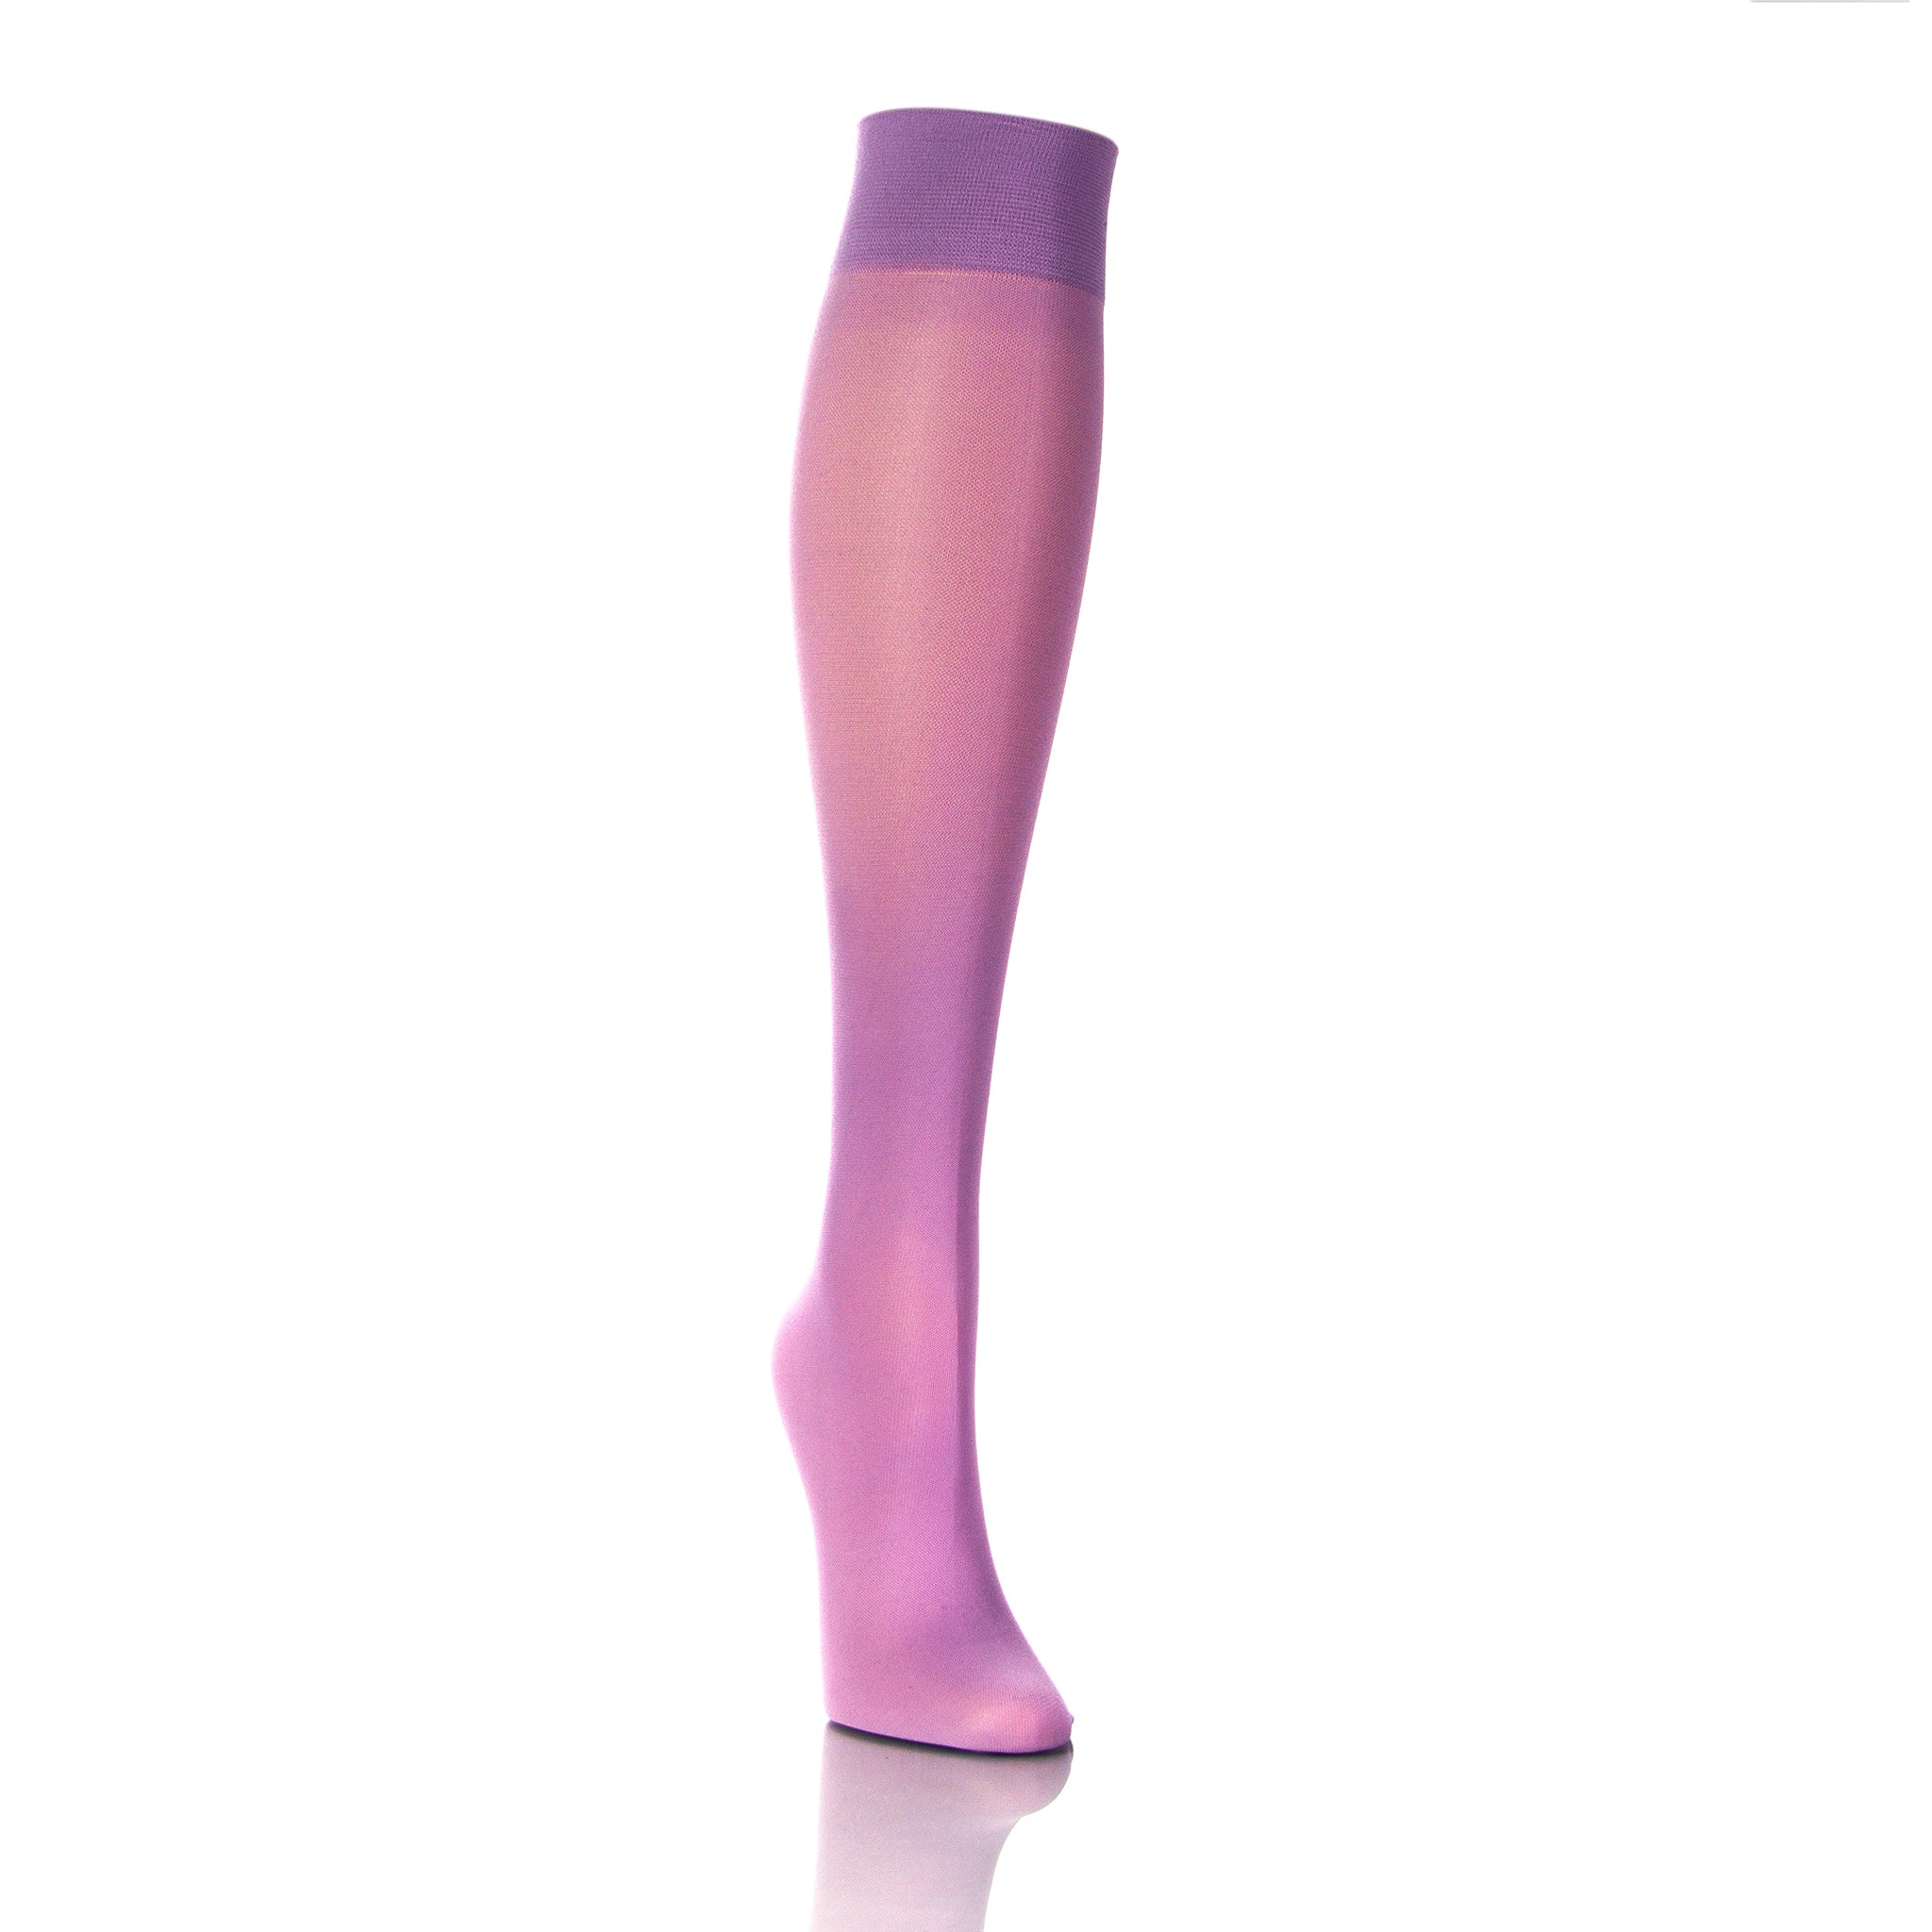 Compression Socks For Women - Colored Lavender - Doctor Brace Softmedi - Diagonal Inside Leg View